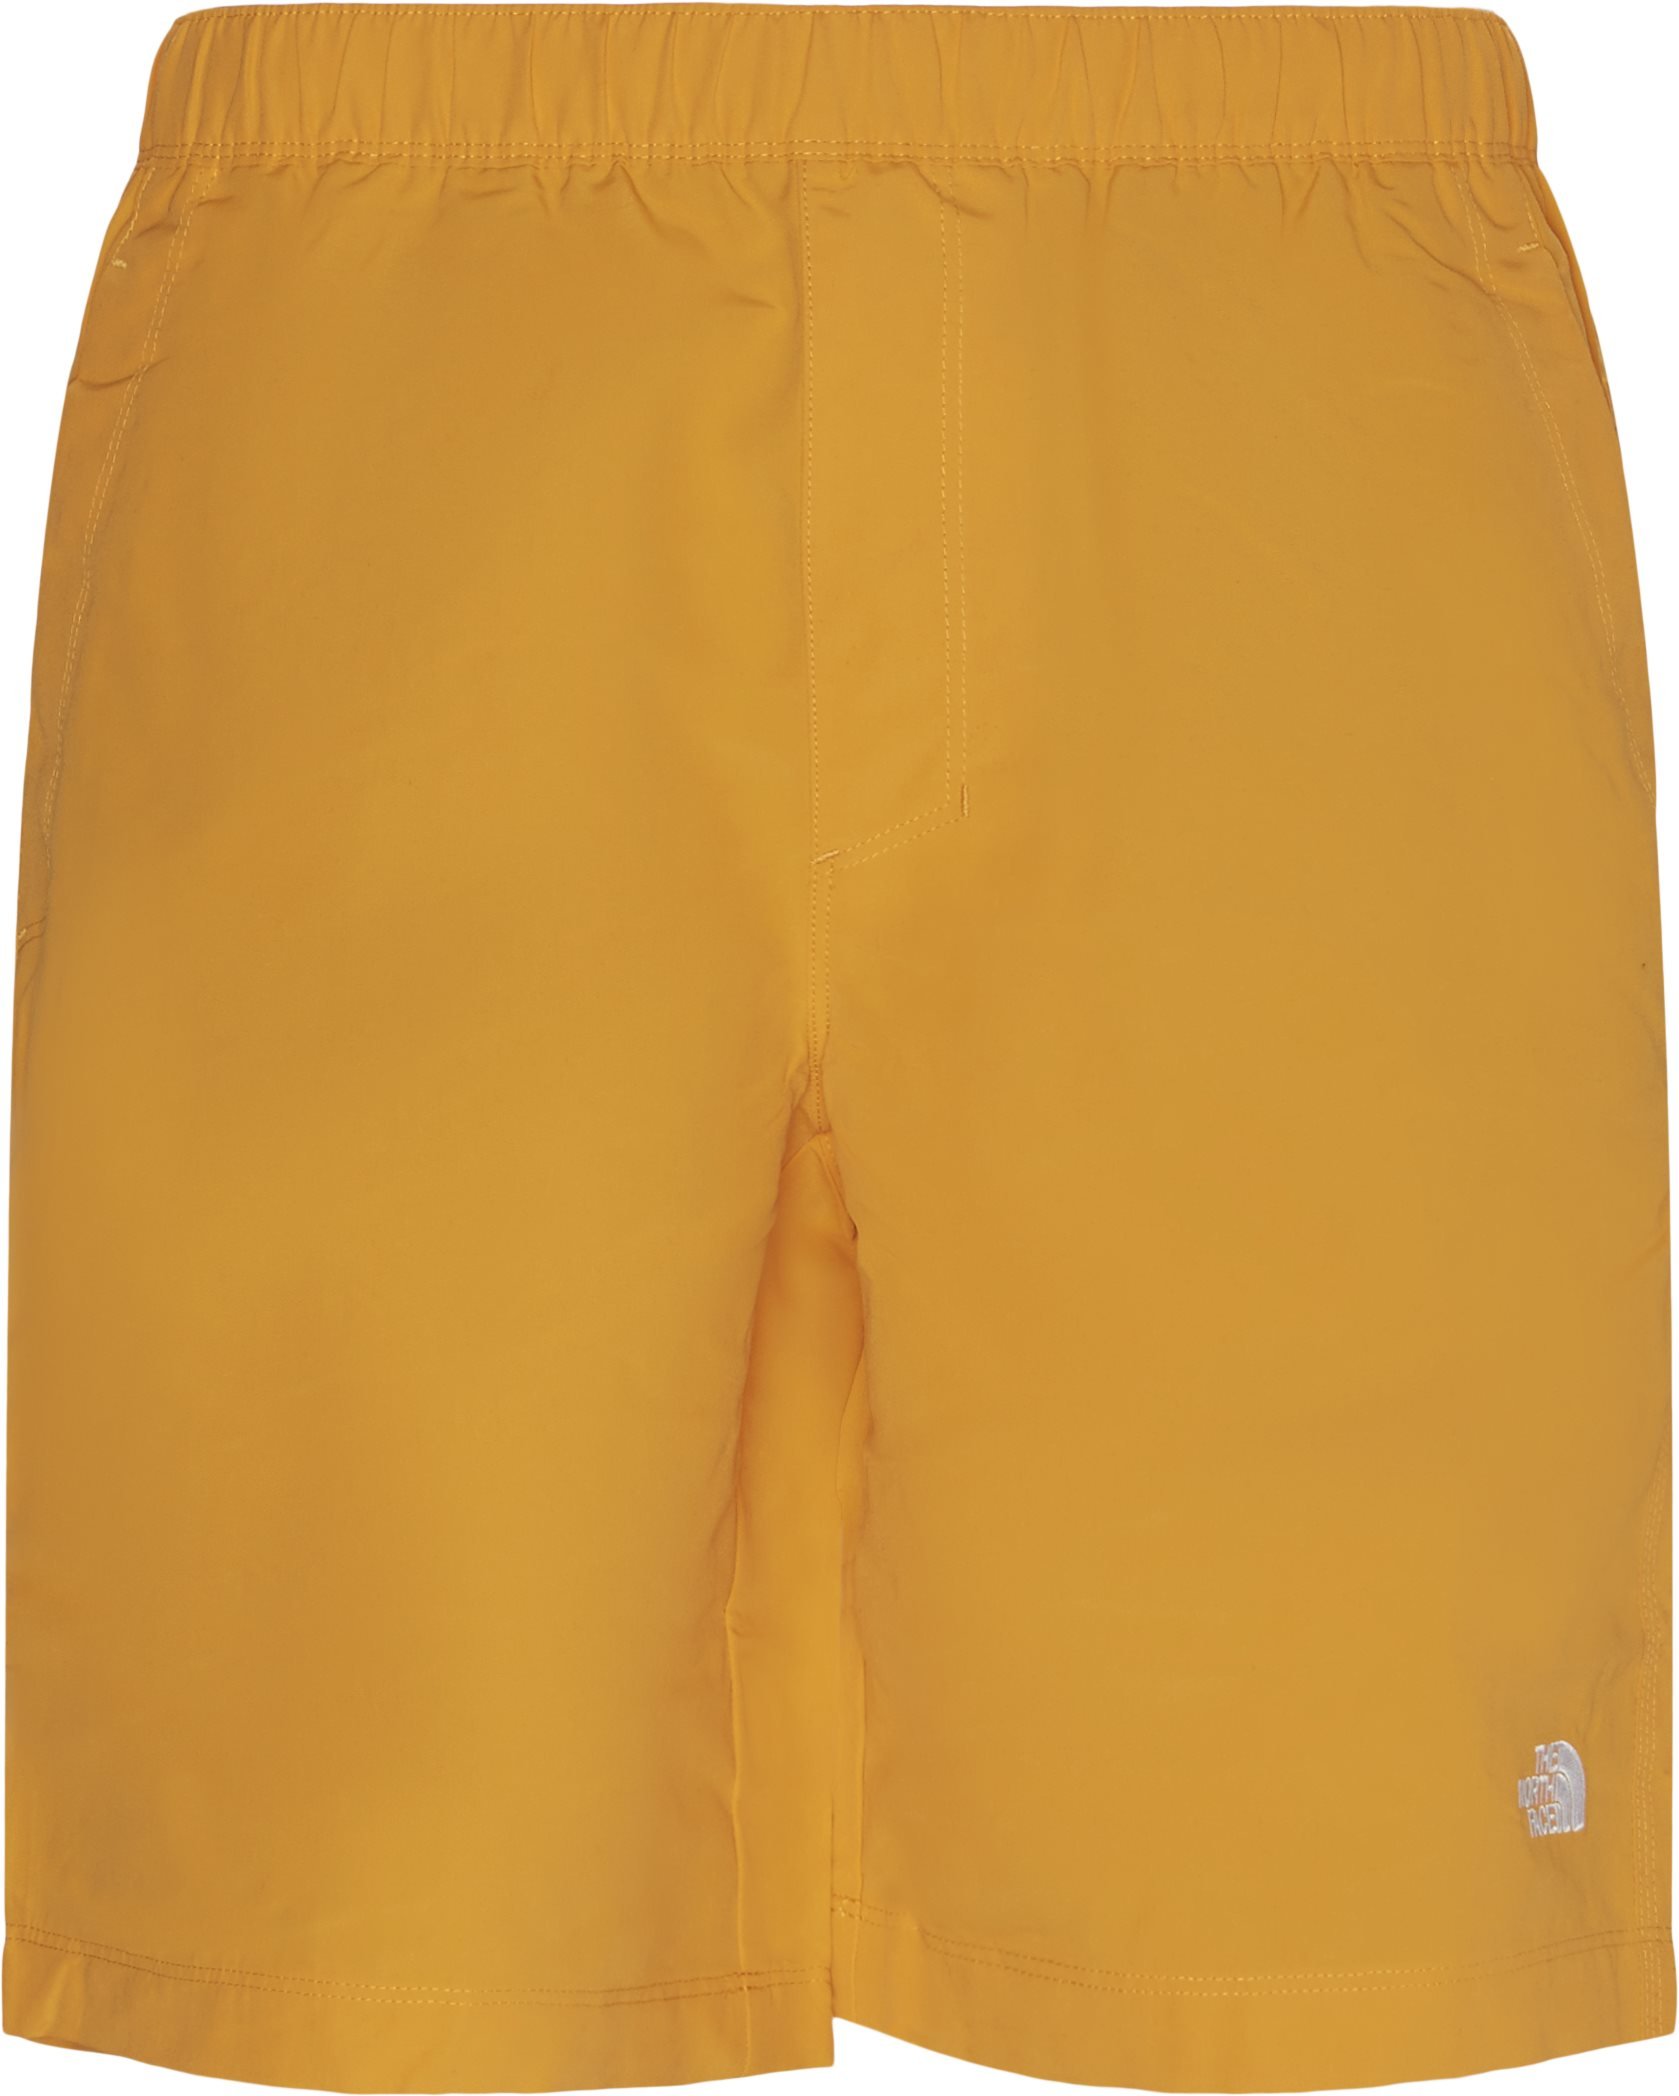 M klass V Rapids shorts - Shorts - Regular fit - Orange